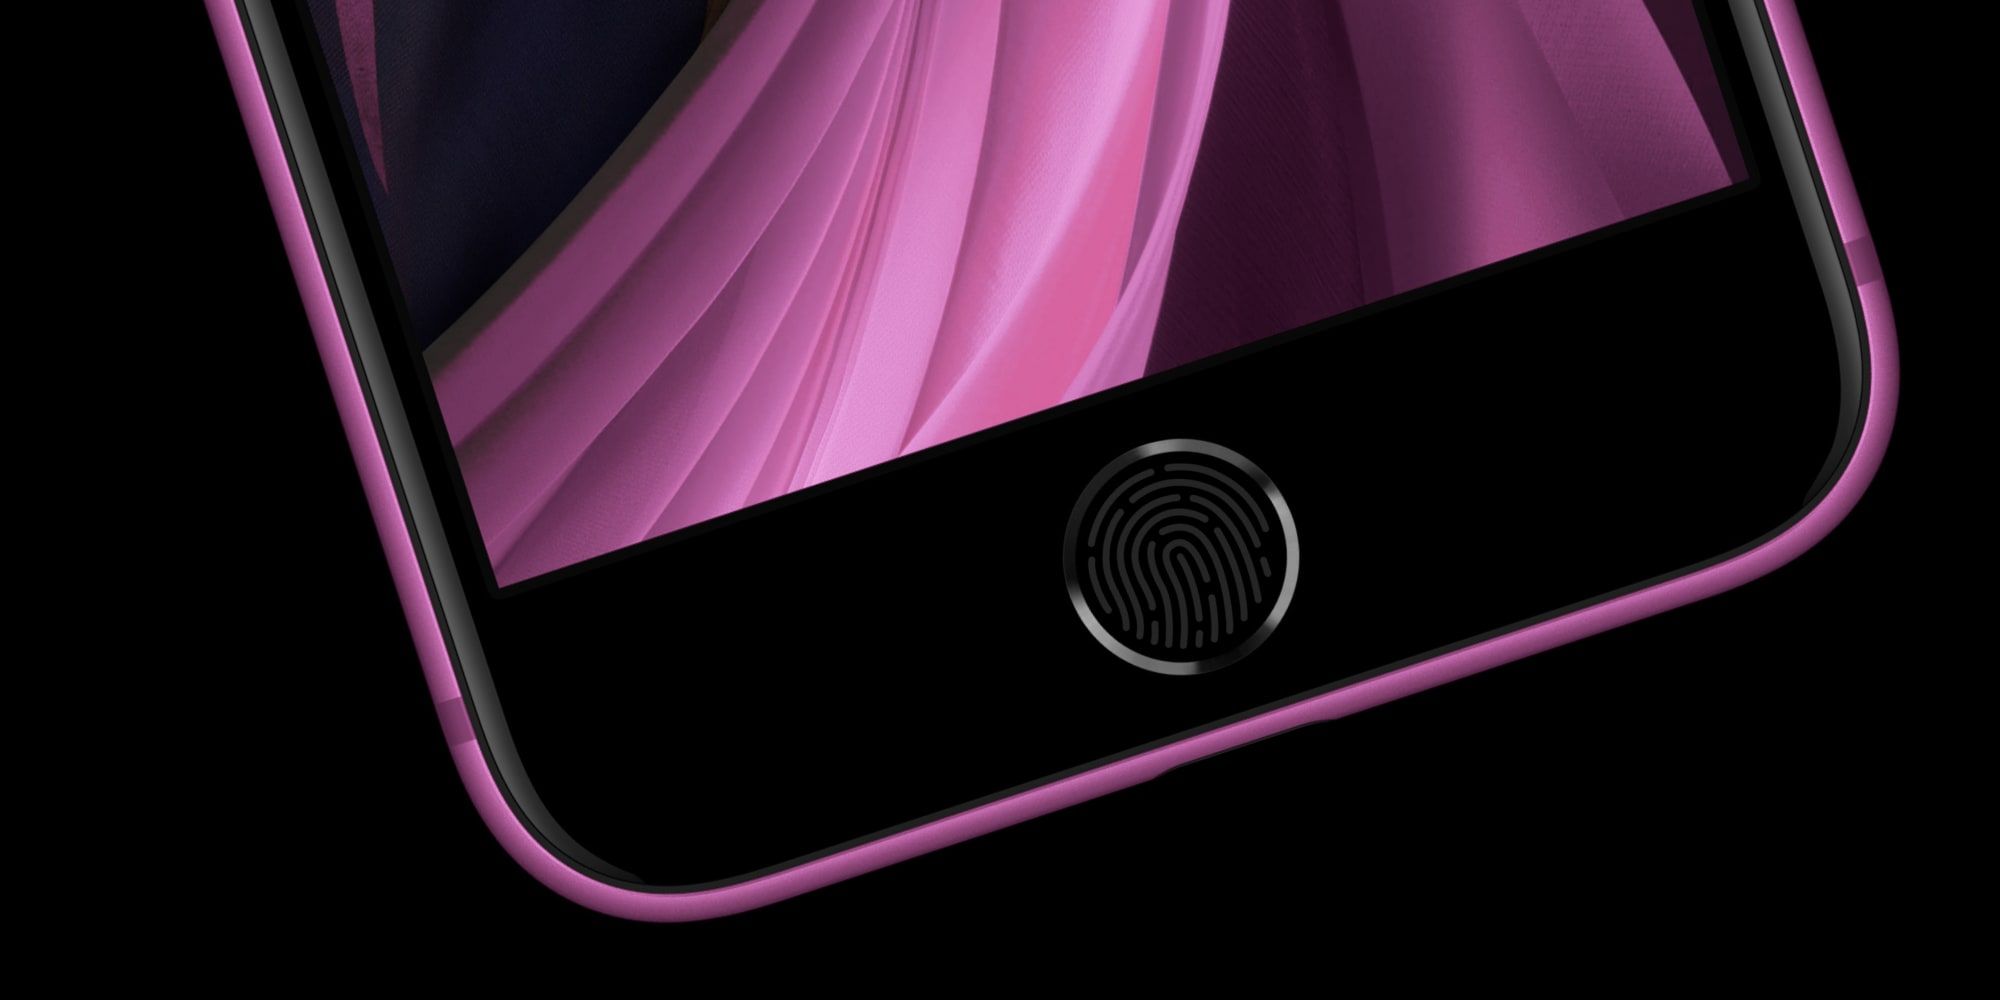 Apple iPhone SE Render In Pink